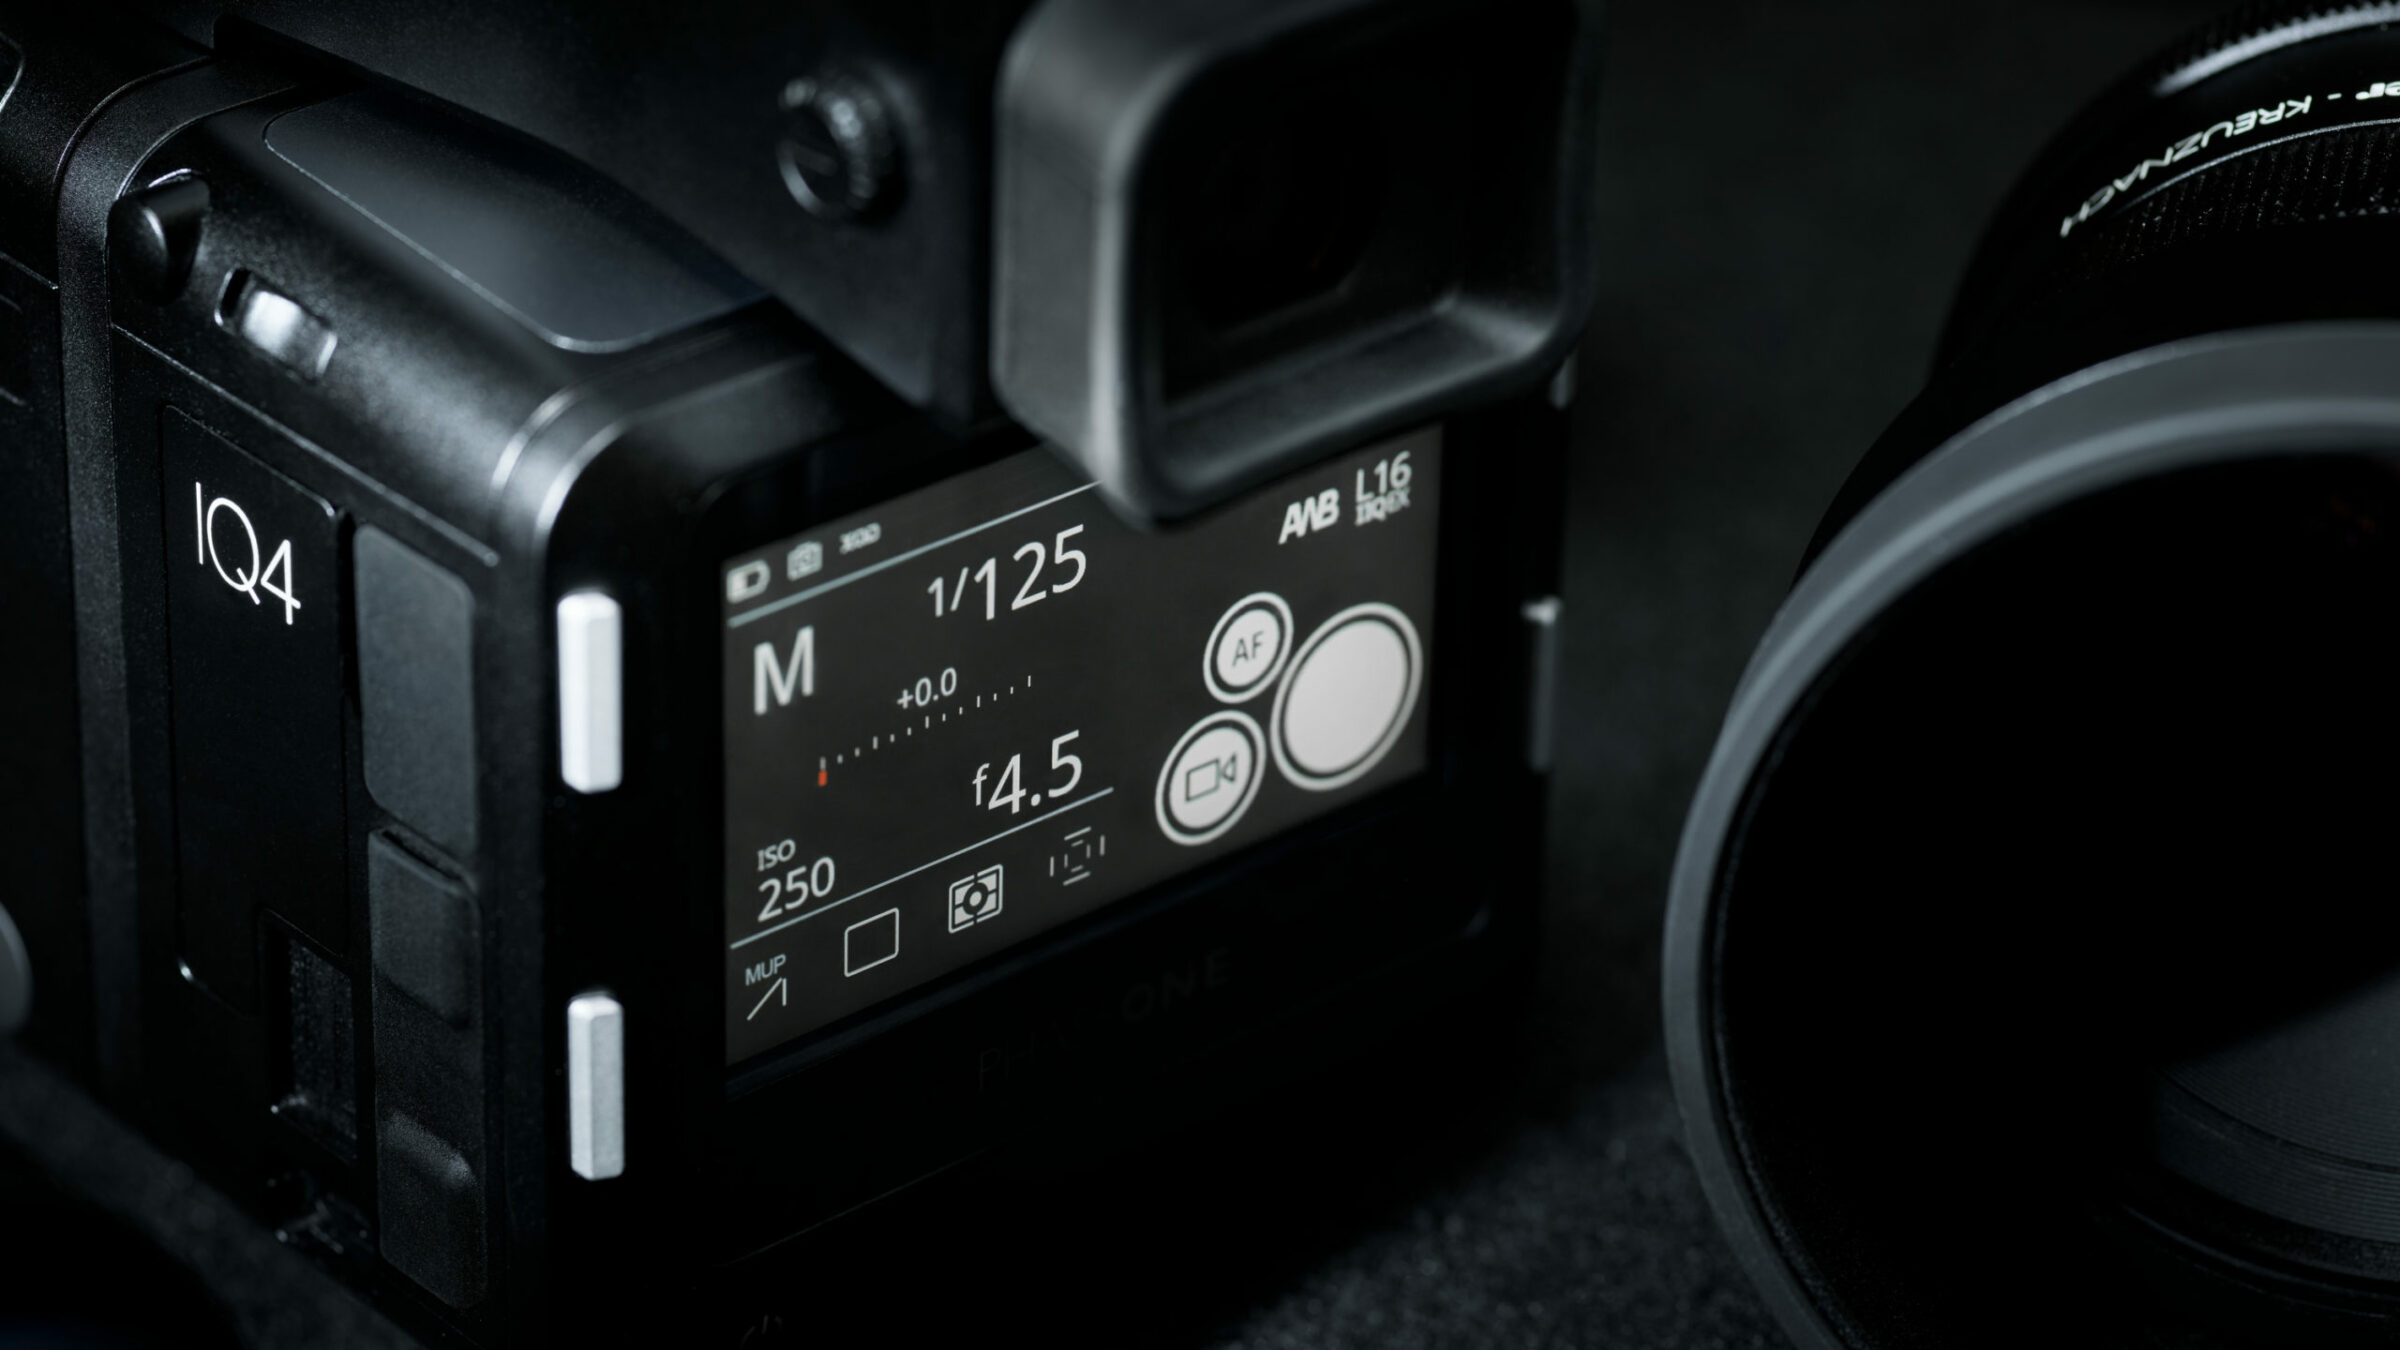 Close-up of the high-resolution IQ4 digital camera back